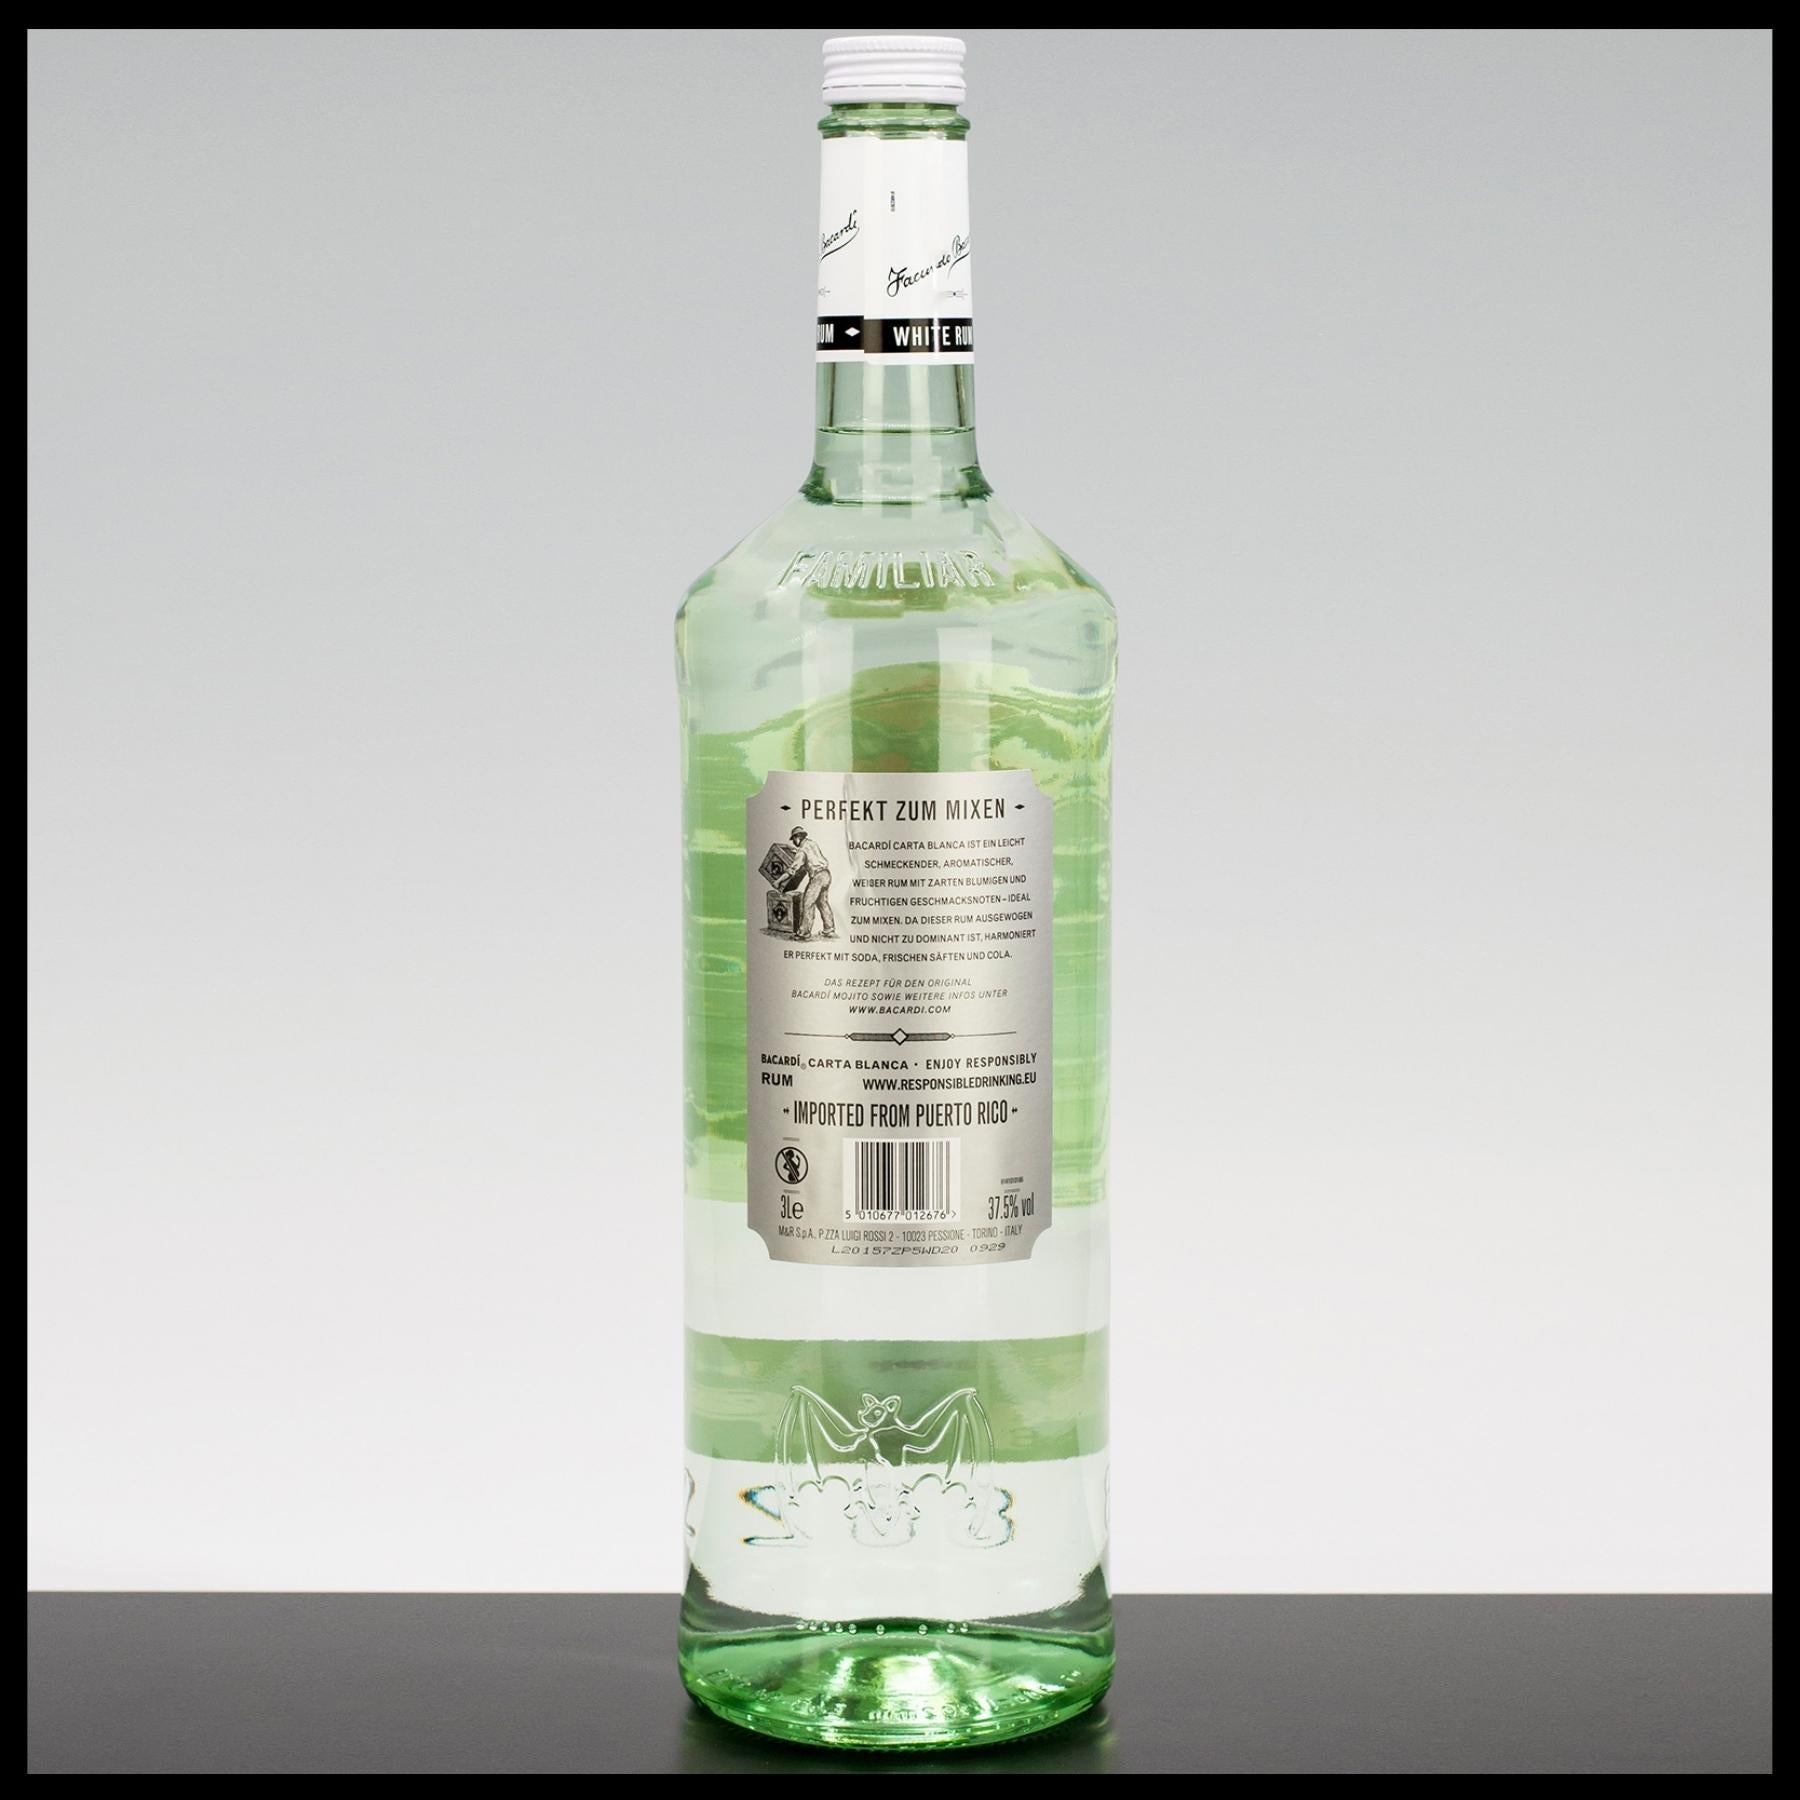 Bacardi Carta Blanca Superior White Rum 3L - 37,5% Vol. - Trinklusiv